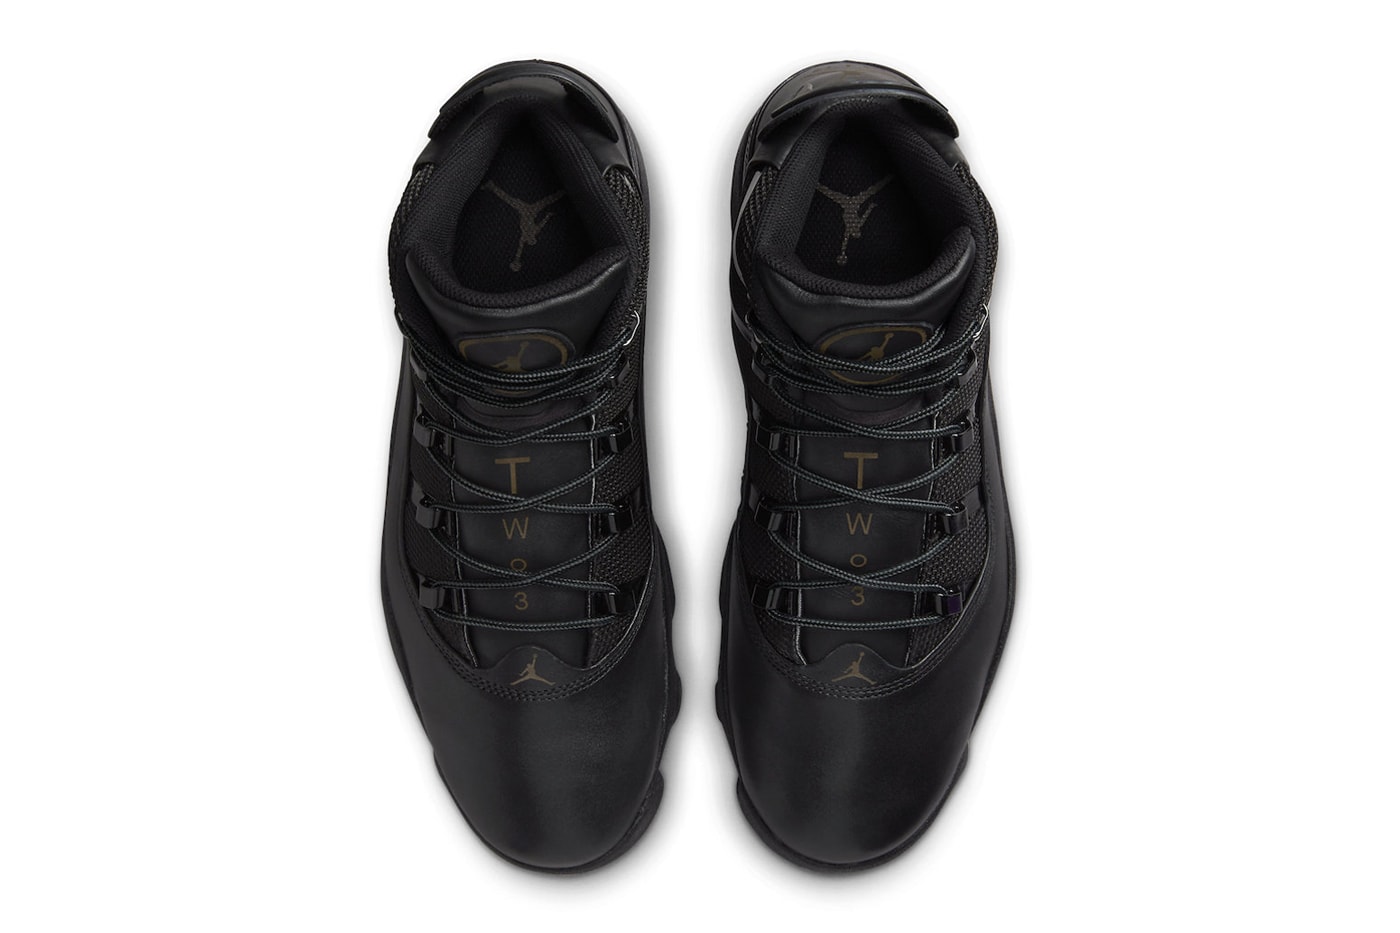 FV3826-001 Jordan 6 Rings Winterized Surfaces in All-Black jordan brand michael jordan winter boots shoes basketball high top 